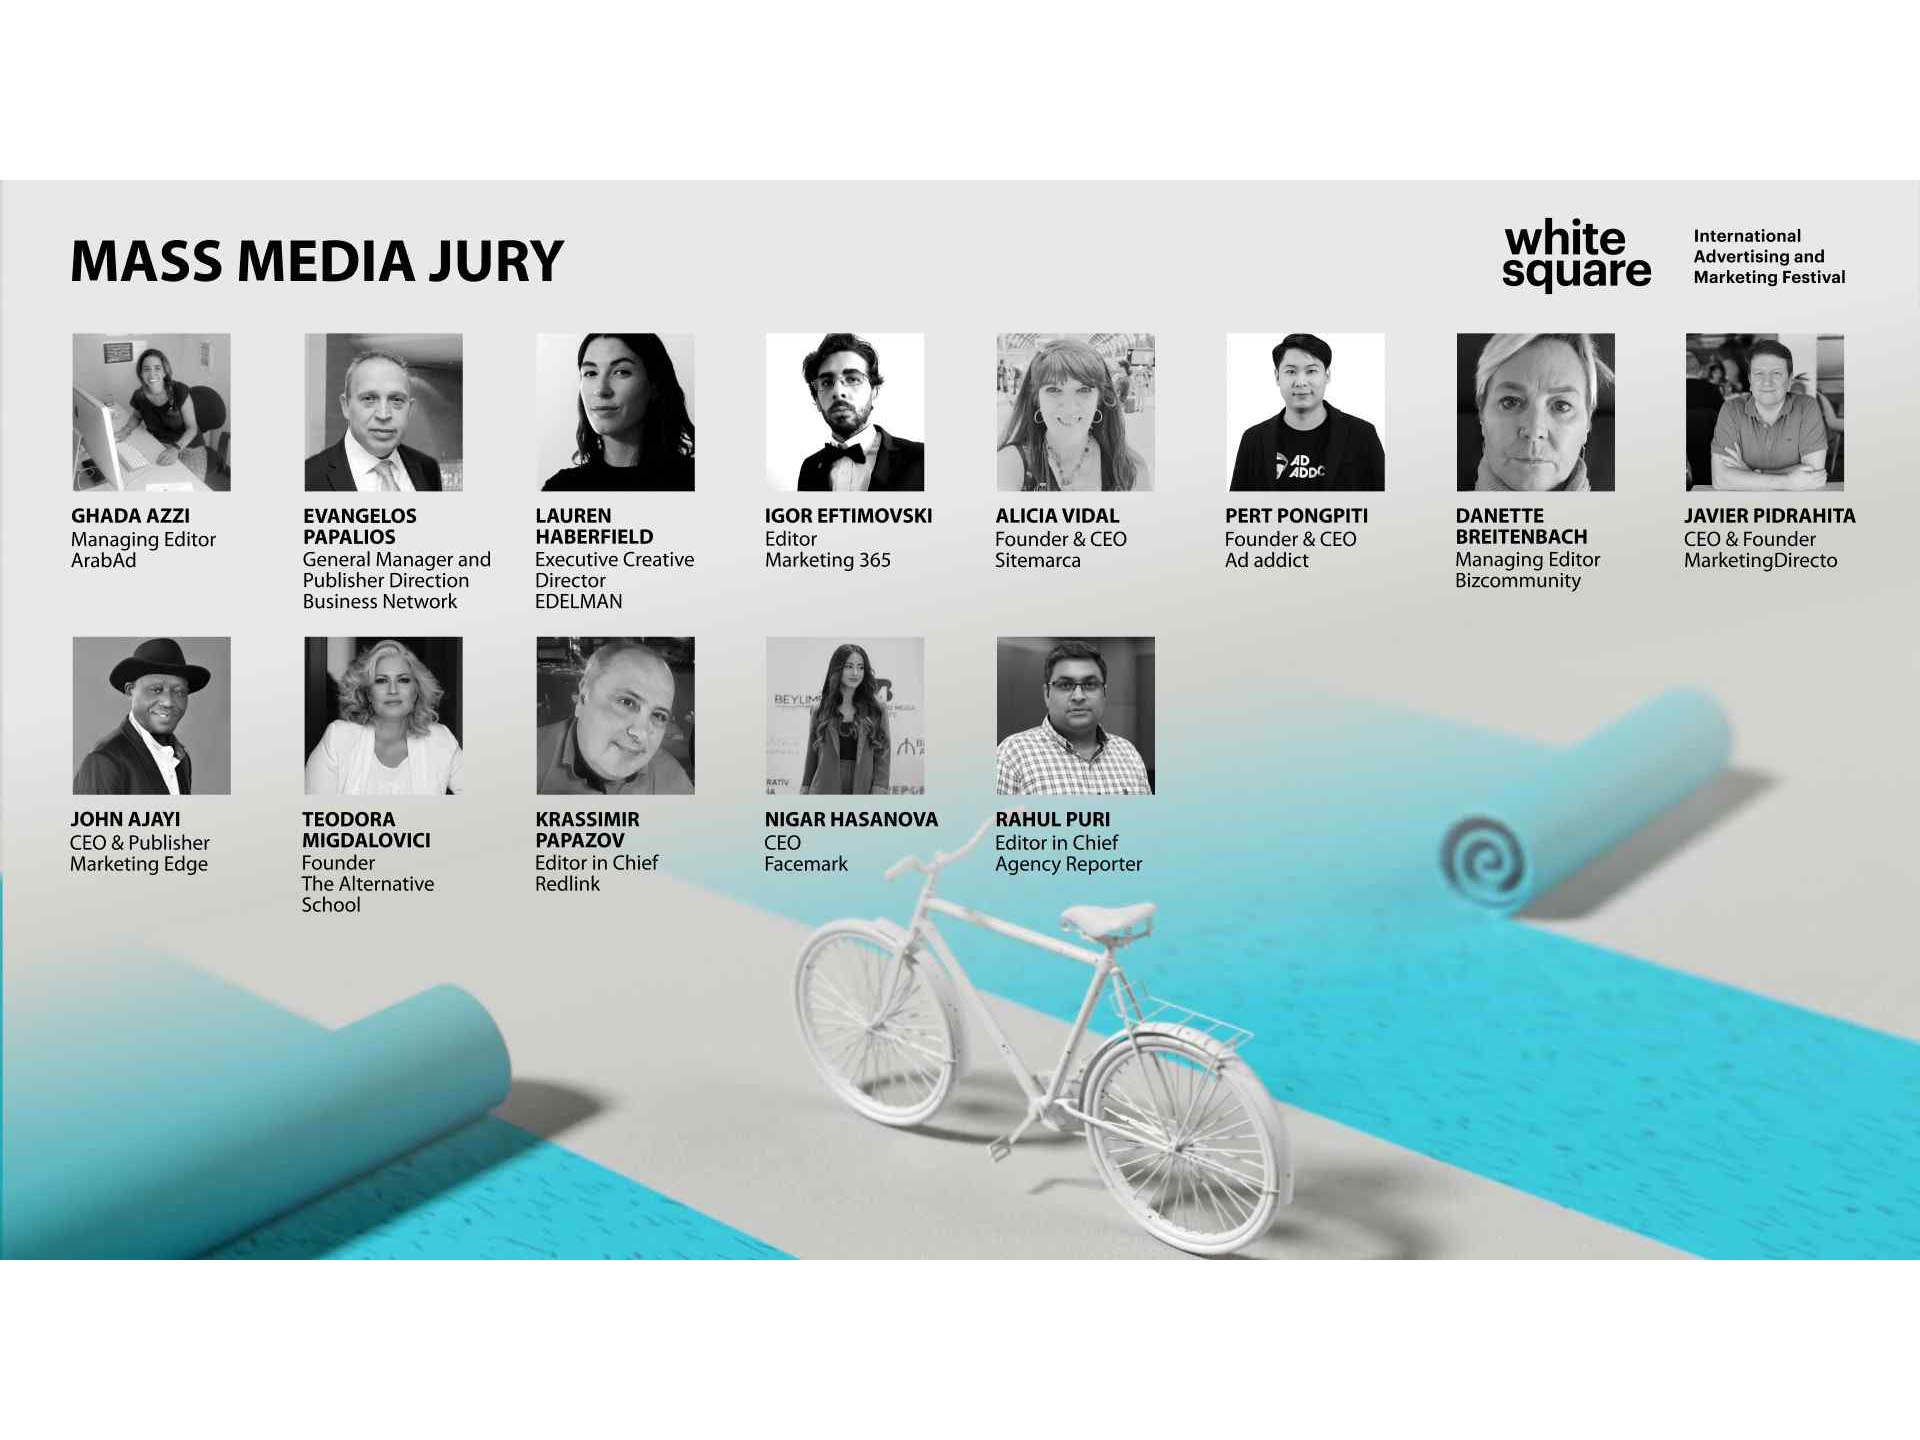 White Square announces its Mass Media jury line-up